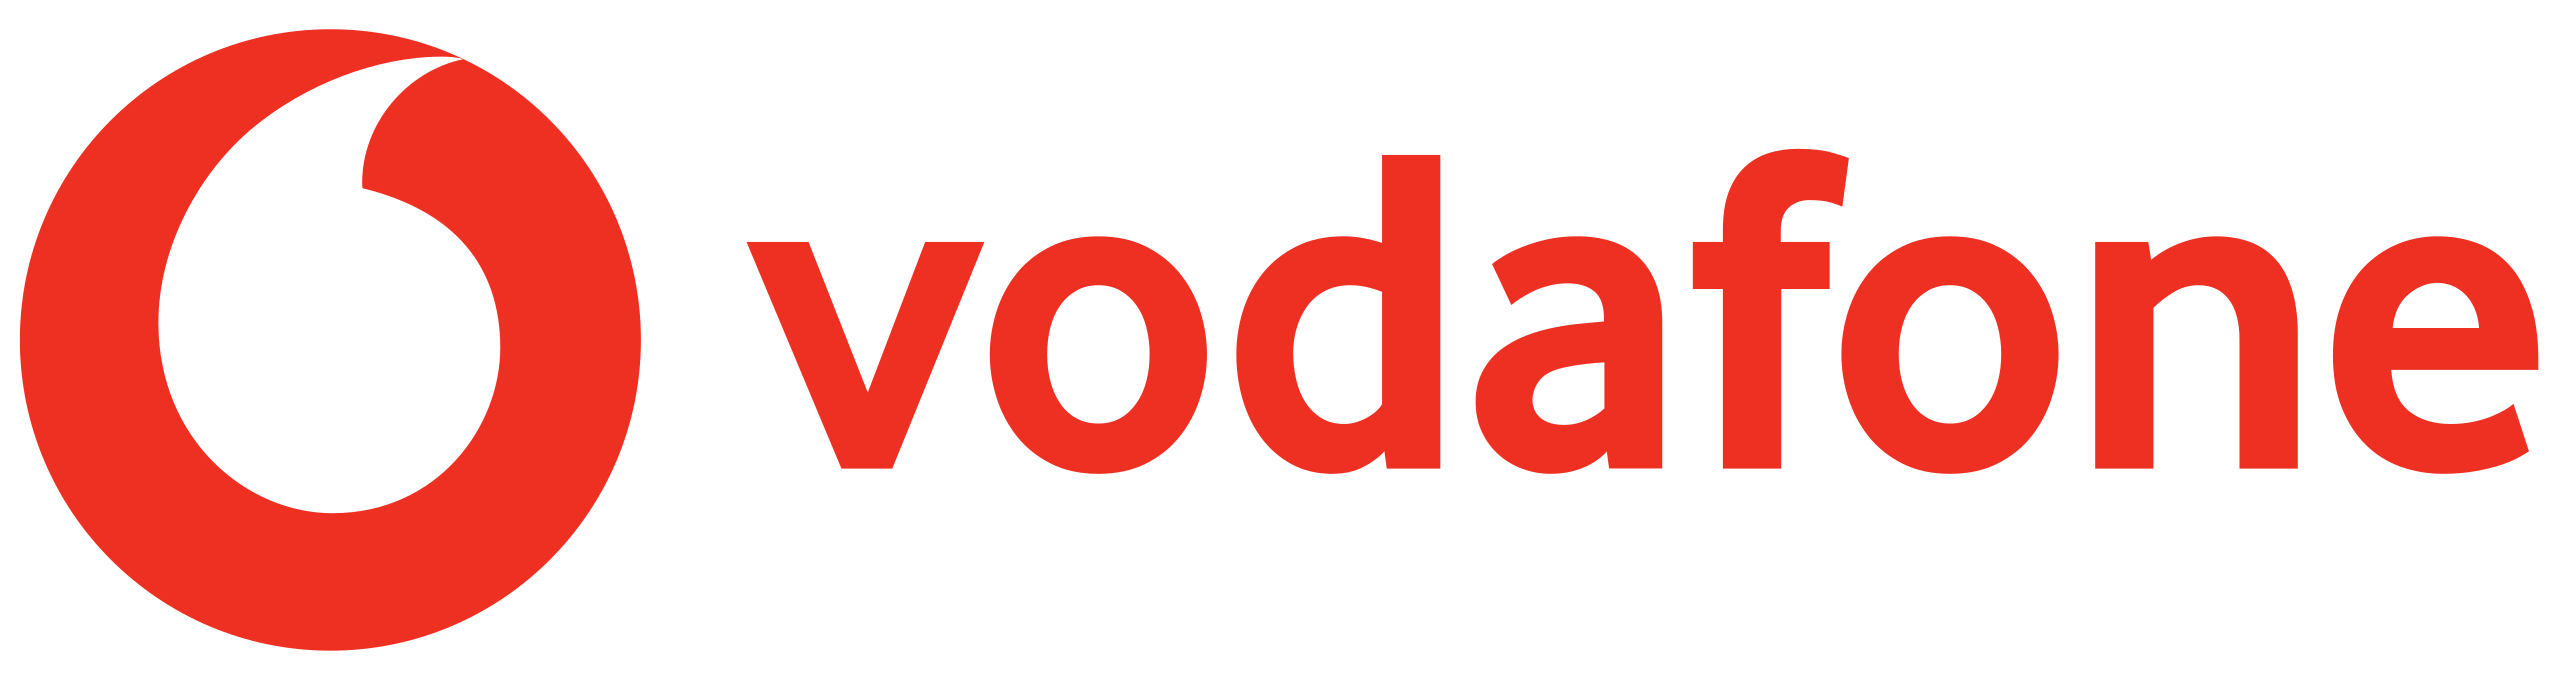 Vodafone_2017_logo.svg-2